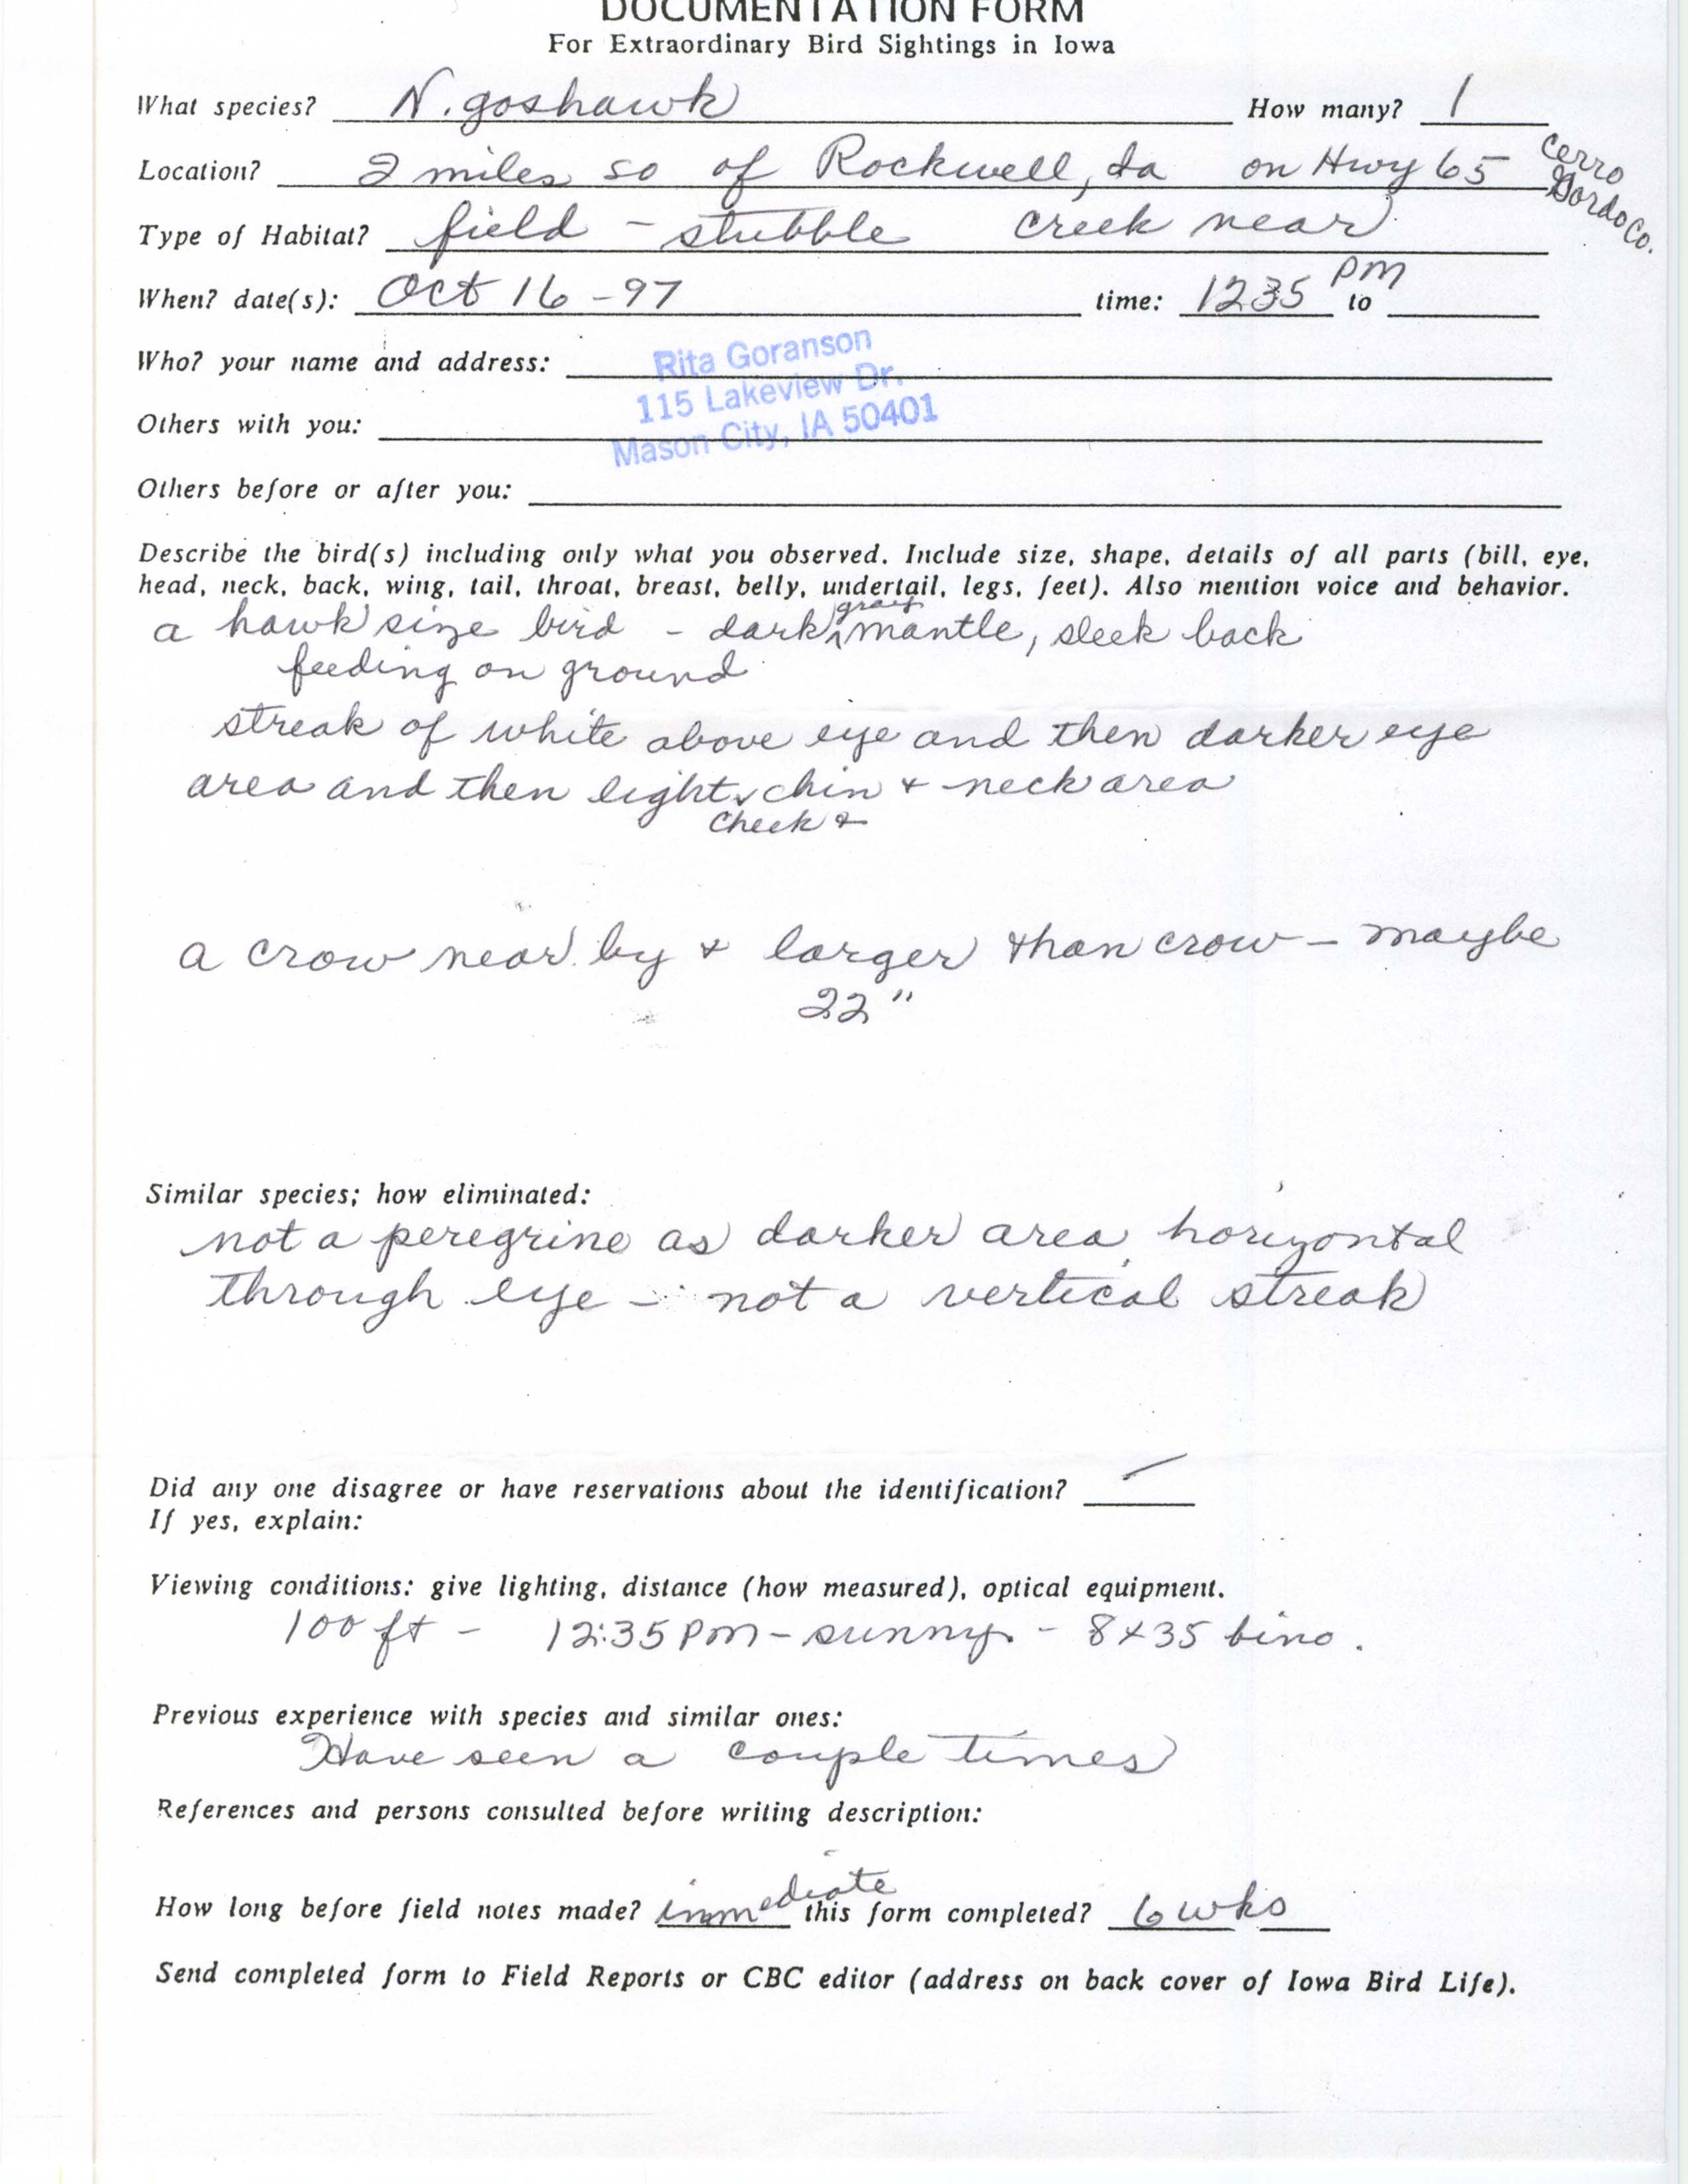 Rare bird documentation form for Northern Goshawk at Rockwell, 1997